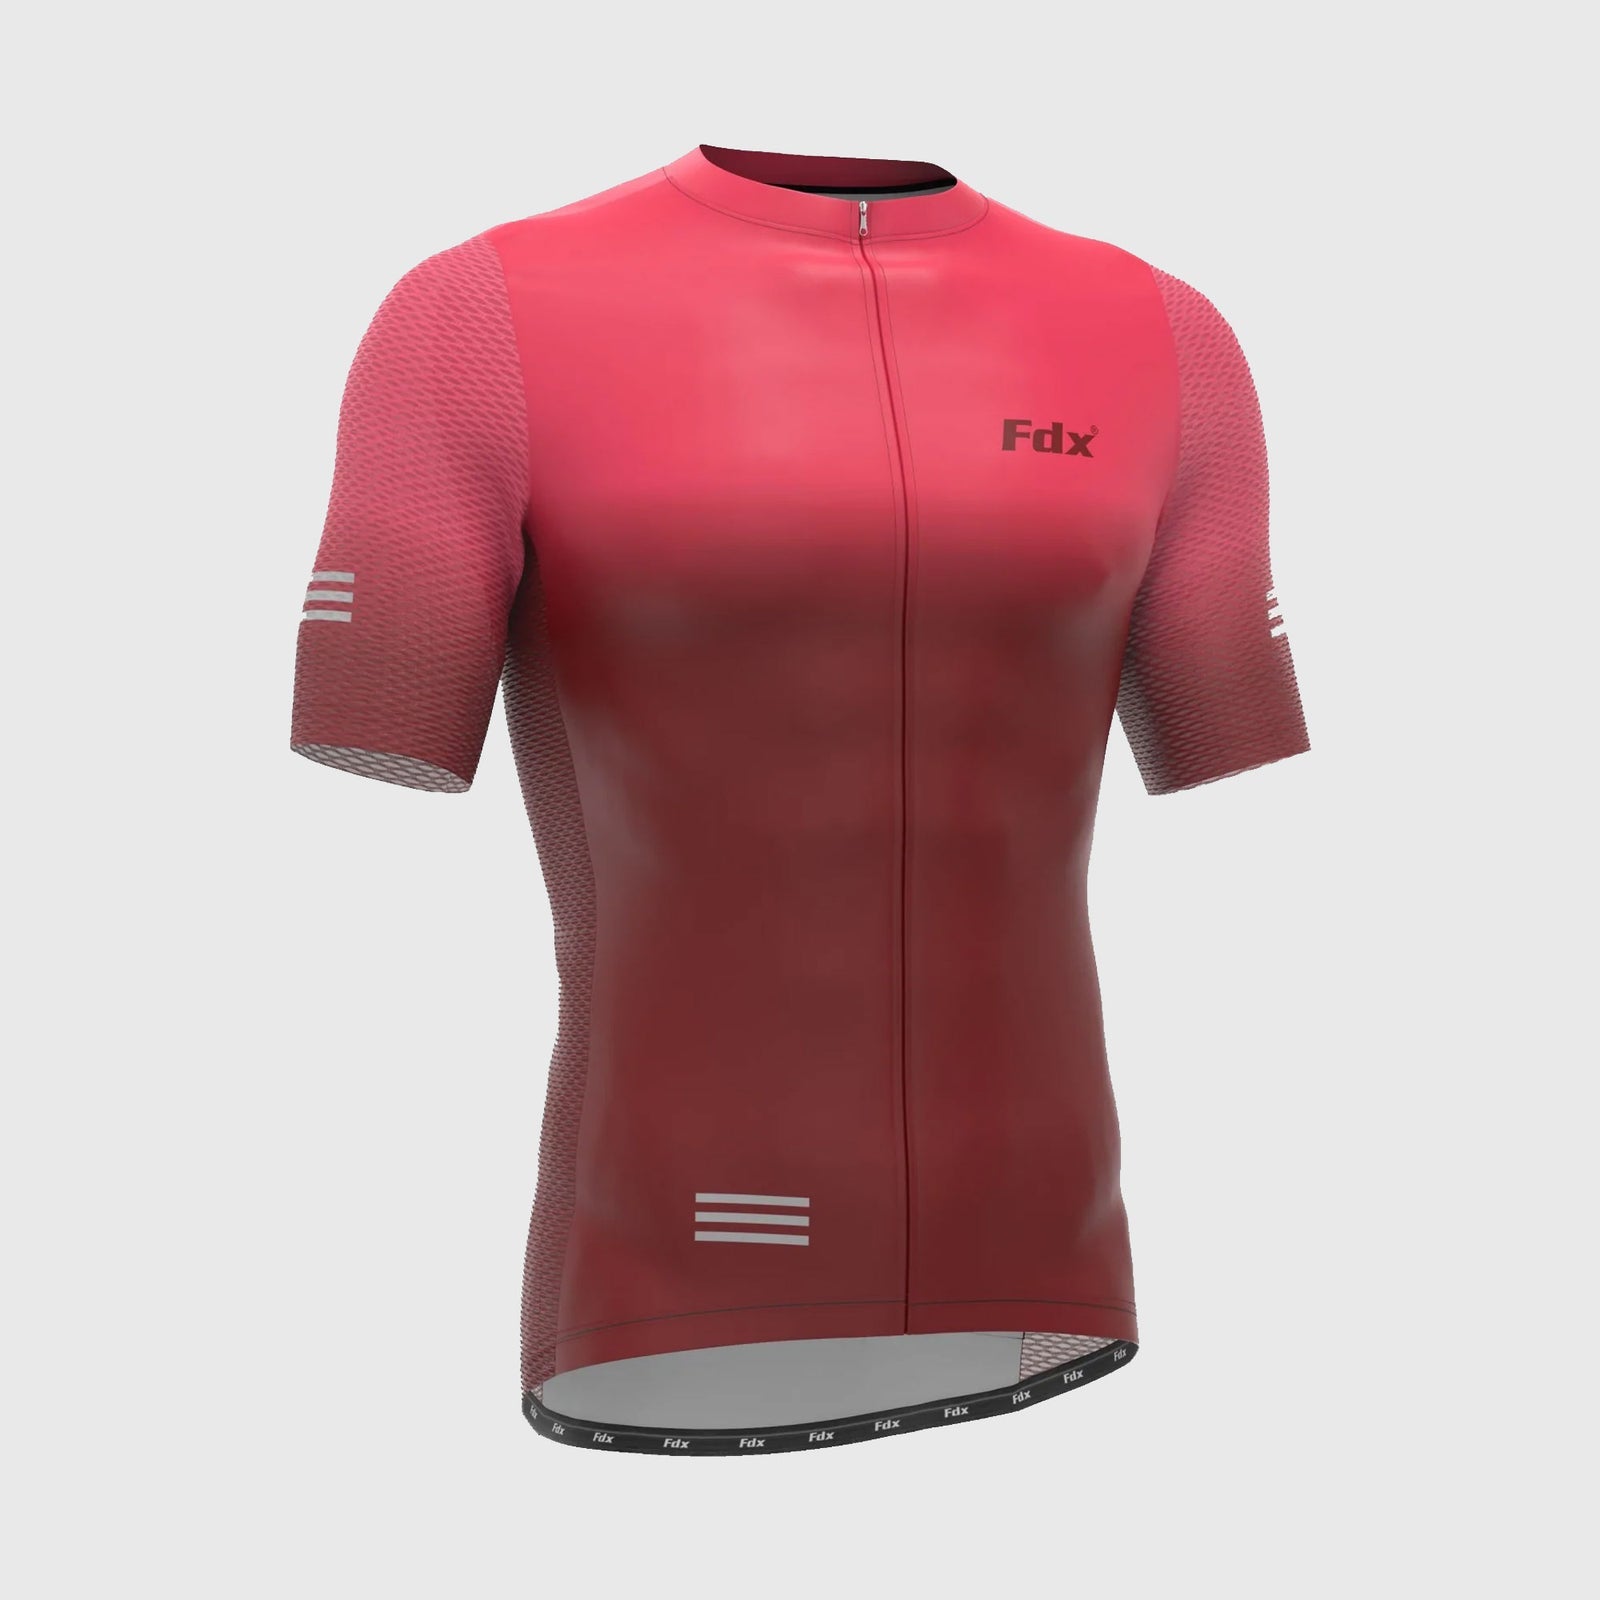 Fdx Mens Pink & Maroon Short Sleeve Cycling Jersey for Summer Best Road Bike Wear Top Light Weight, Full Zipper, Pockets & Hi-viz Reflectors - Duo